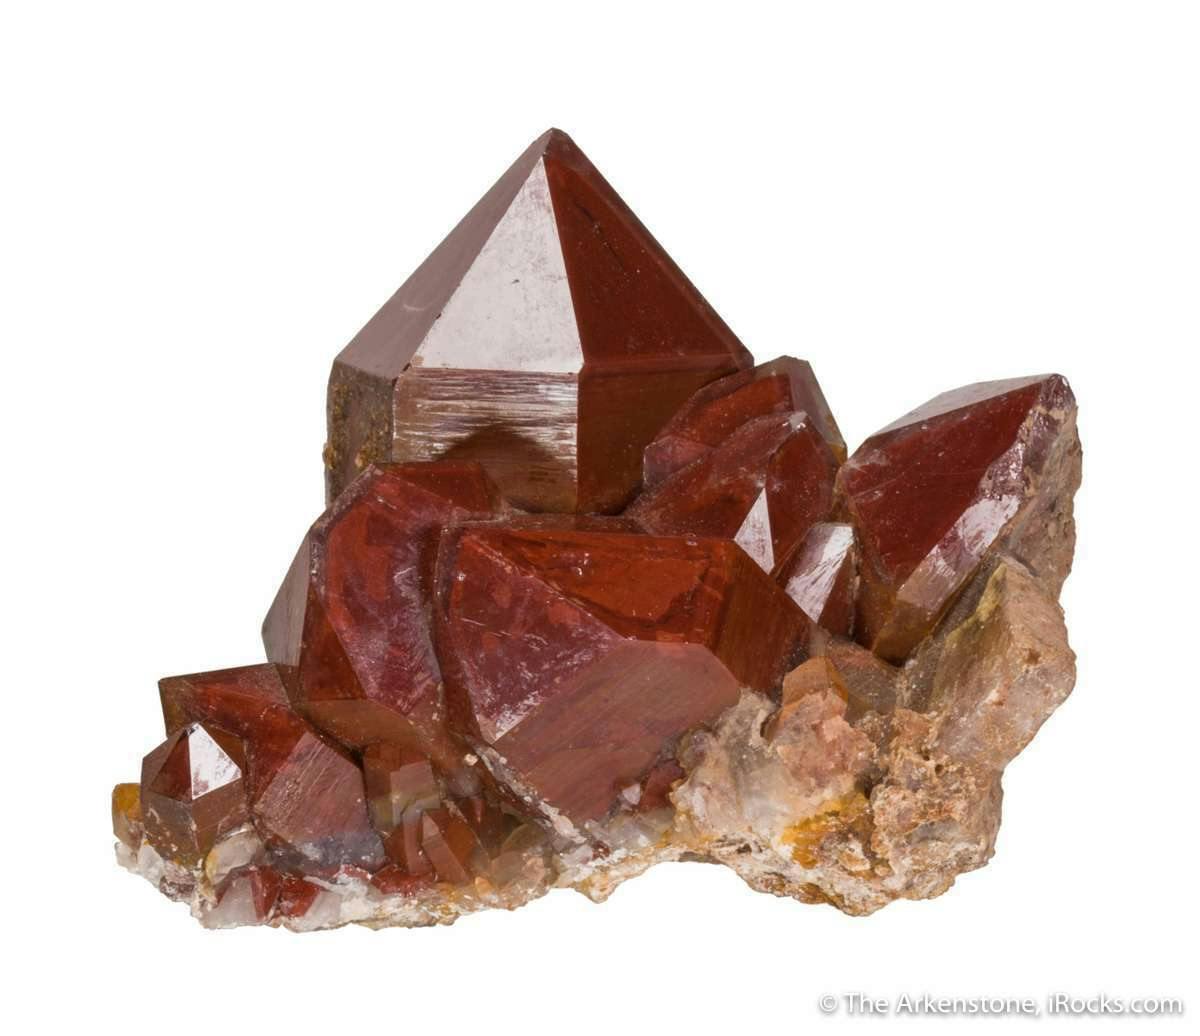 crystallography - equant quartz with hexagonal pyramidal terminations